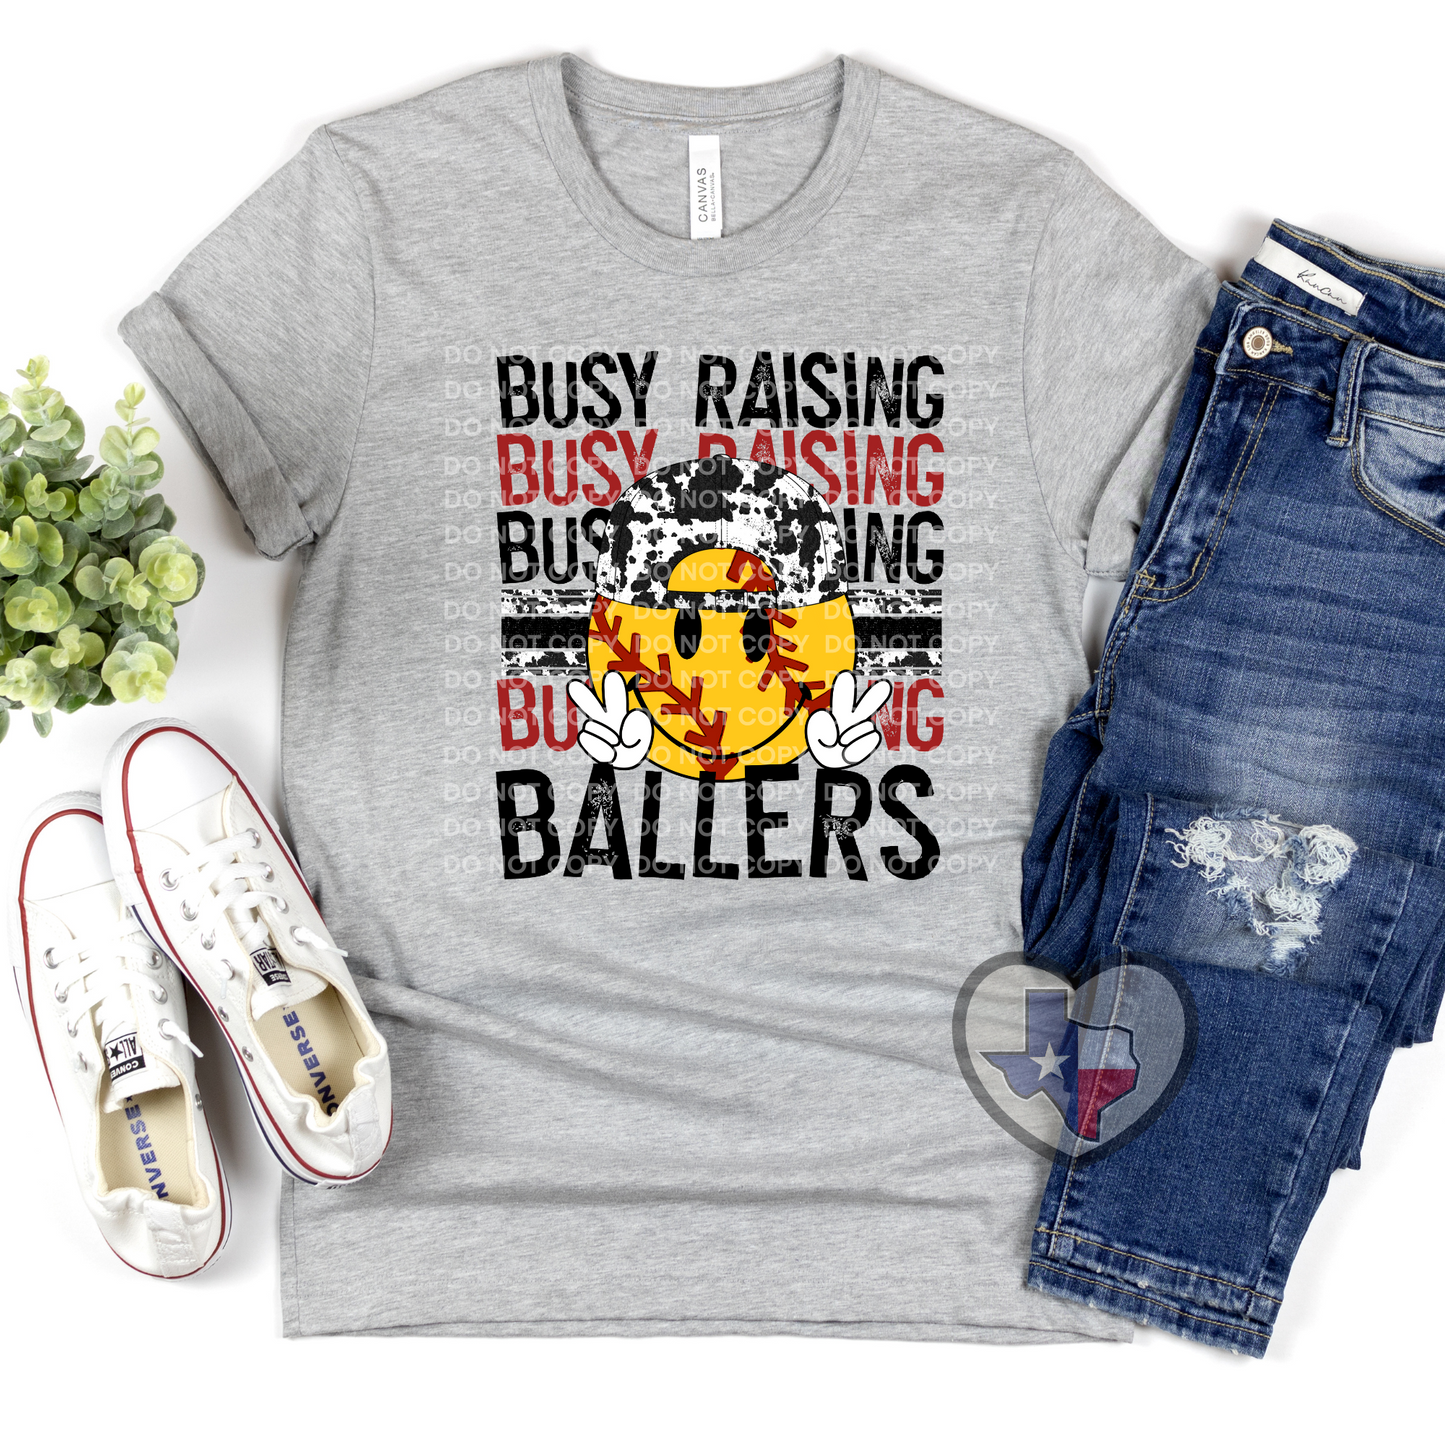 Busy Raisin' Ballers (Softball Cowprint) DTF